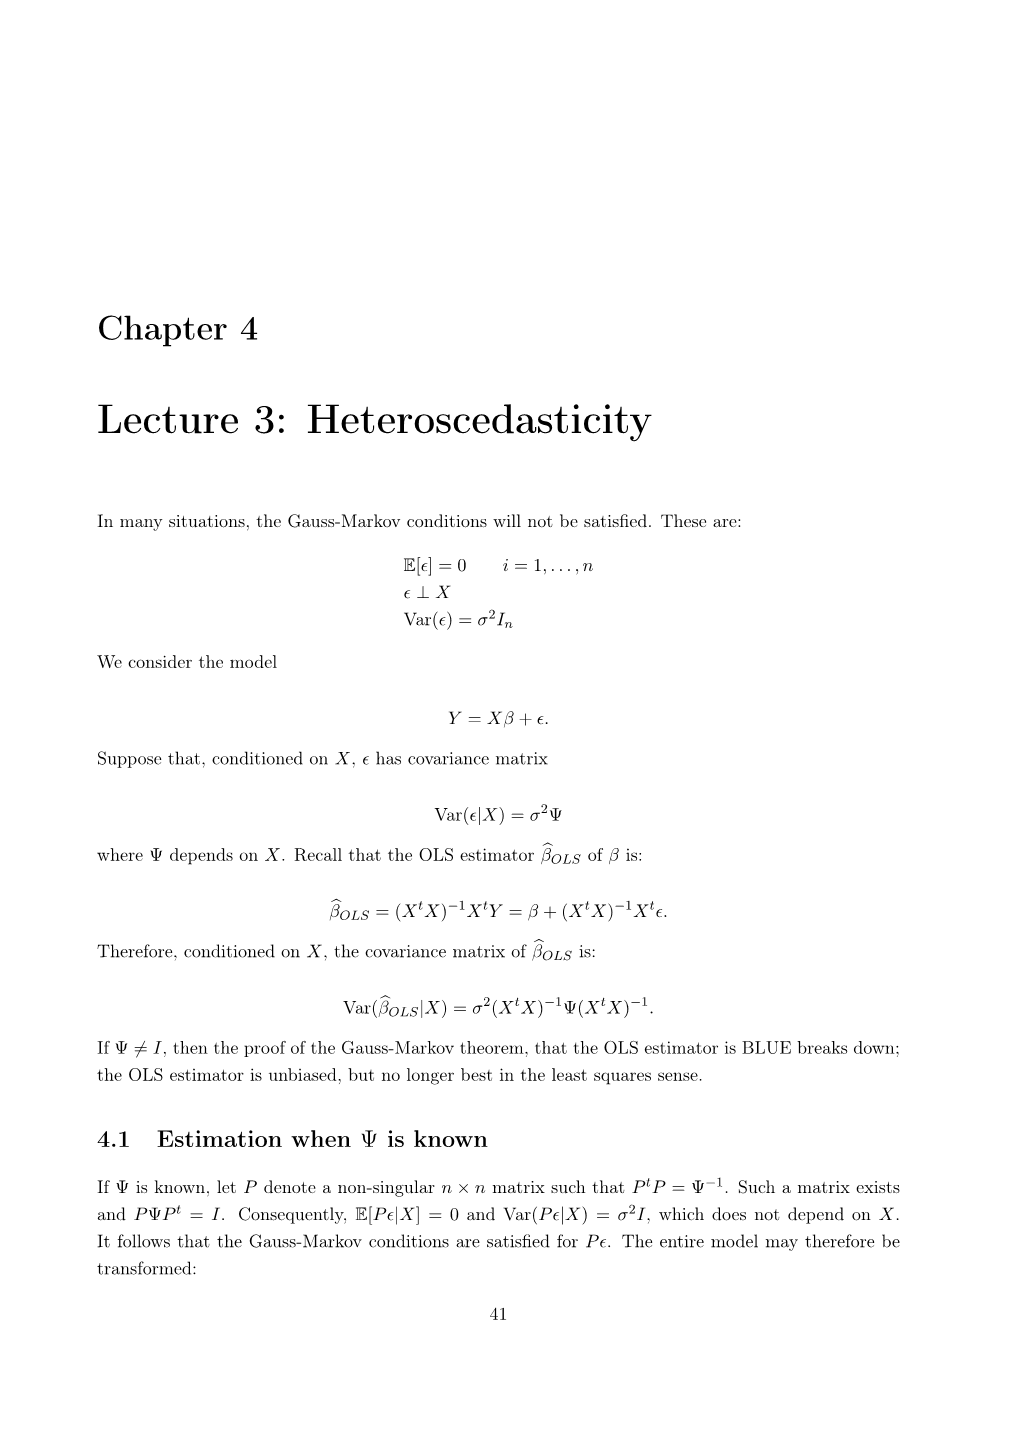 Lecture 3: Heteroscedasticity